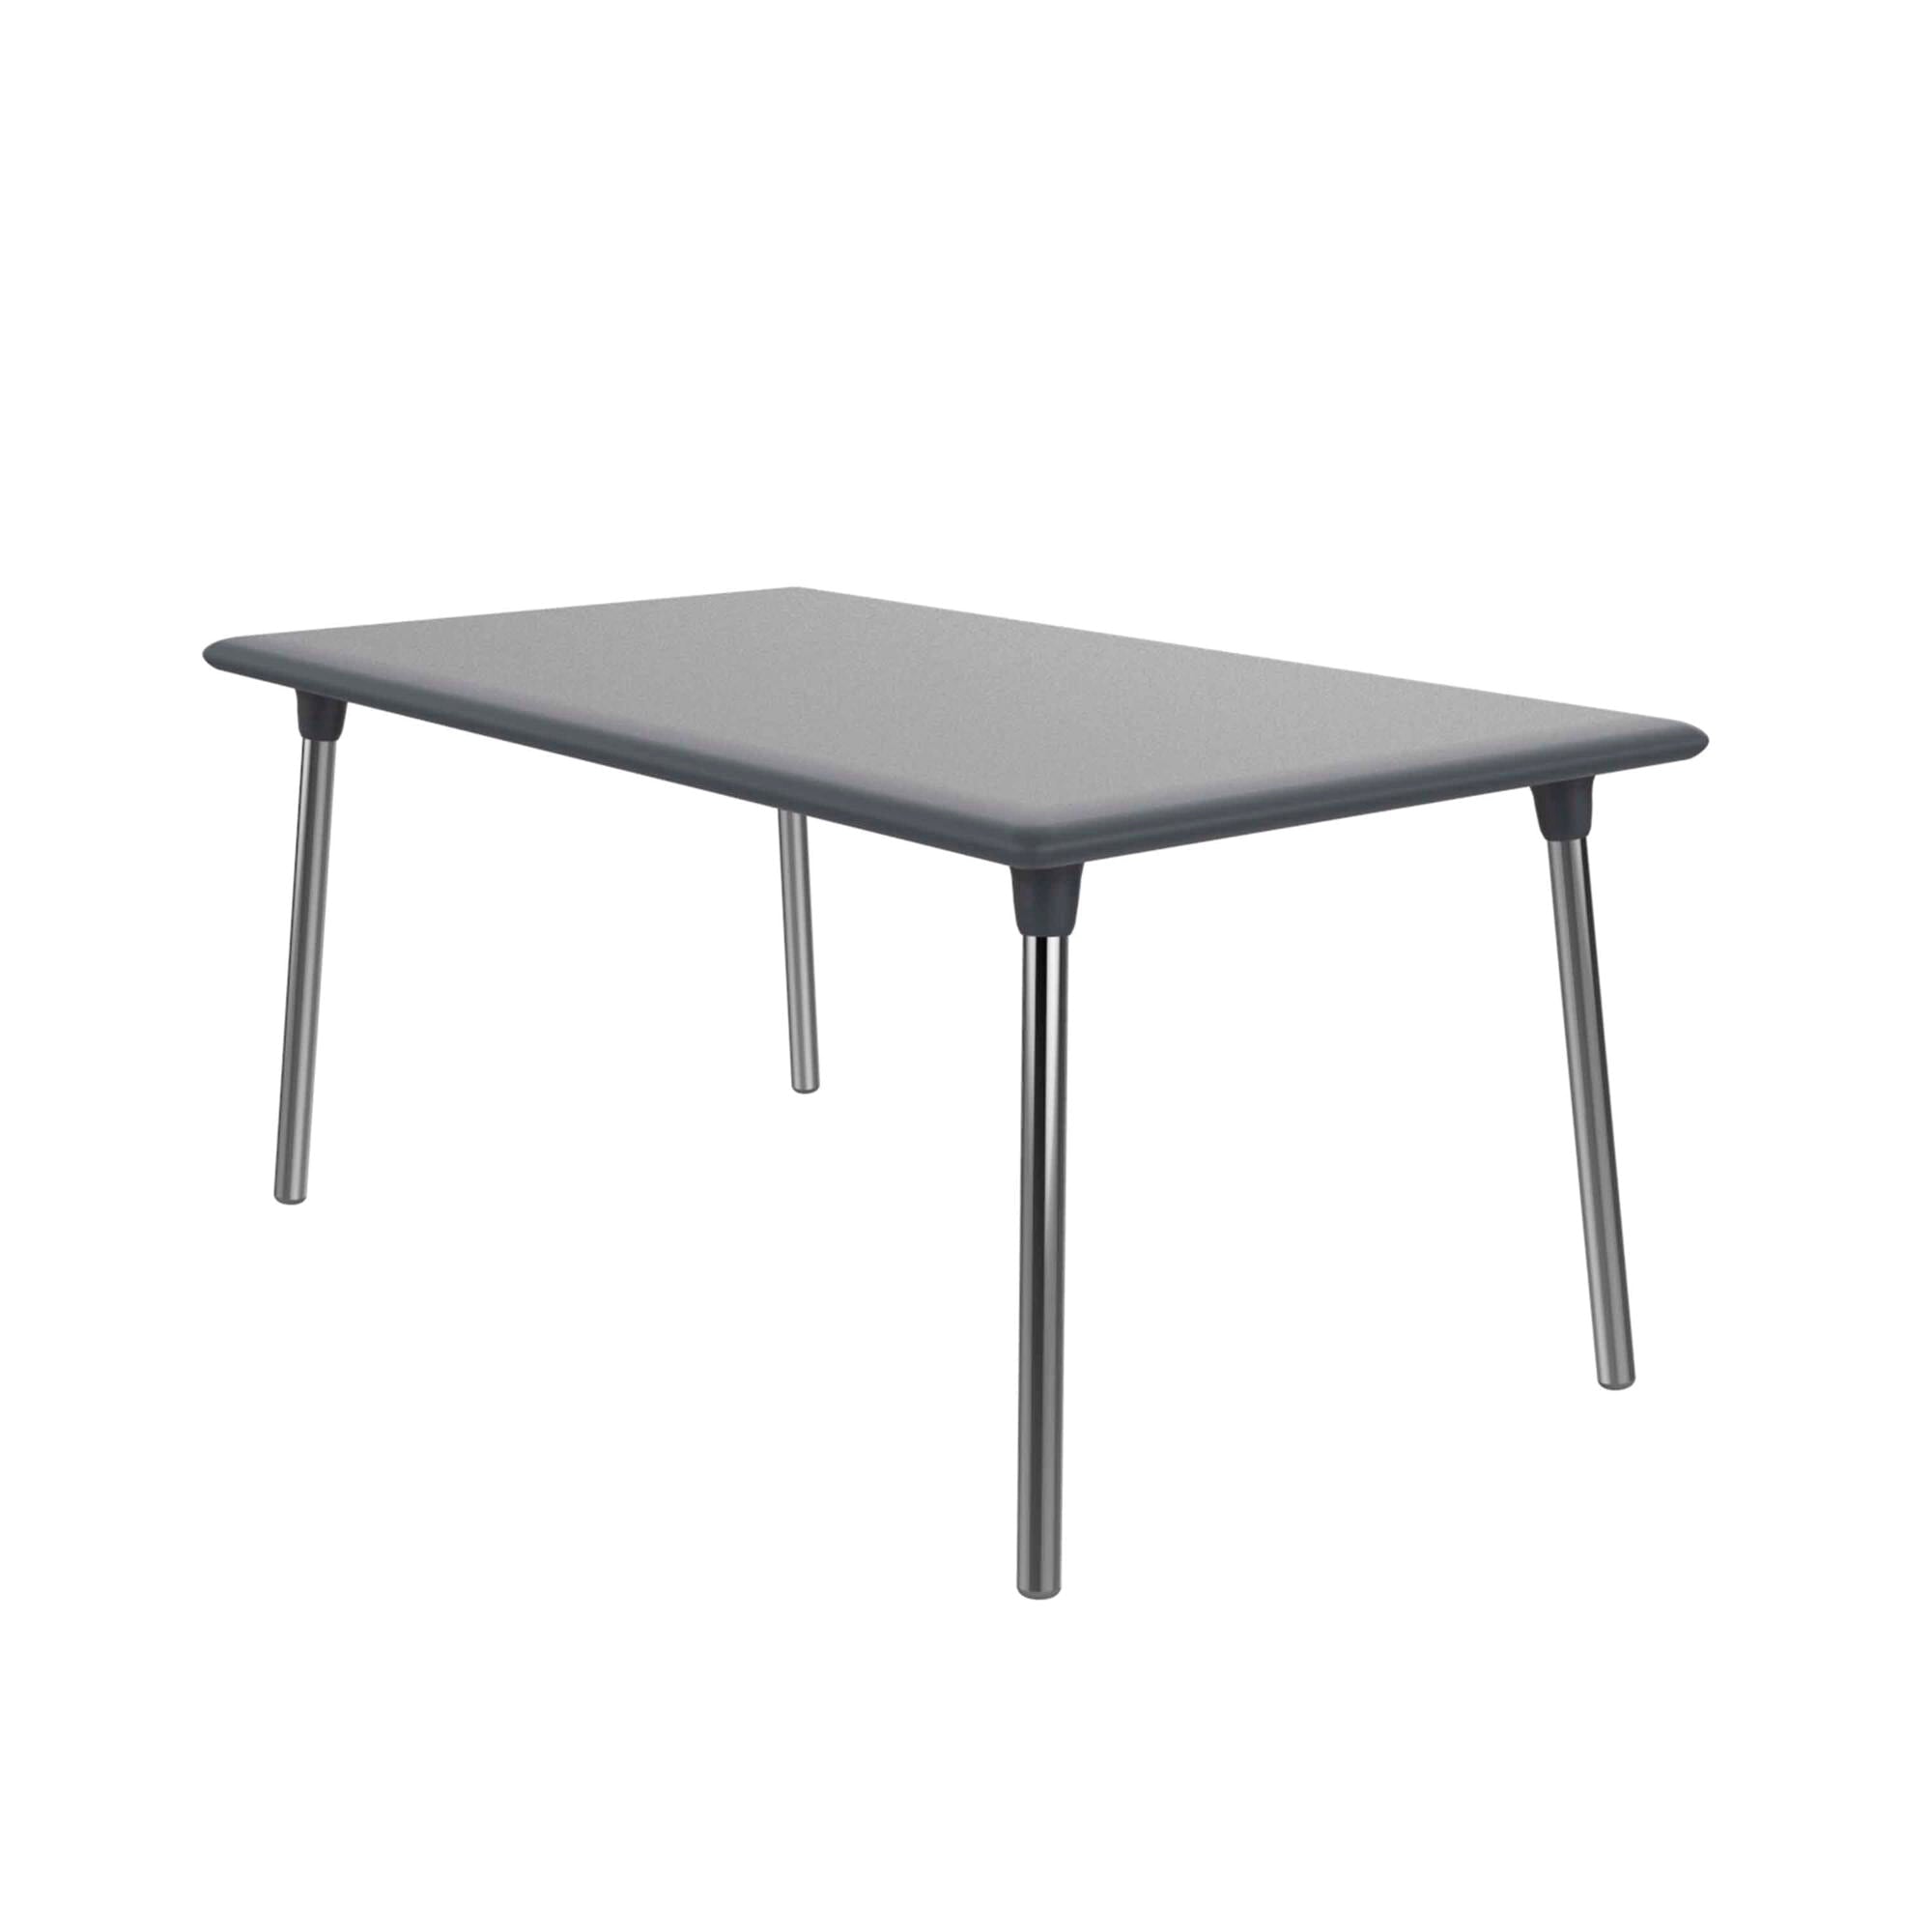 Resol new flash rectangular table indoors, outdoors 160x90